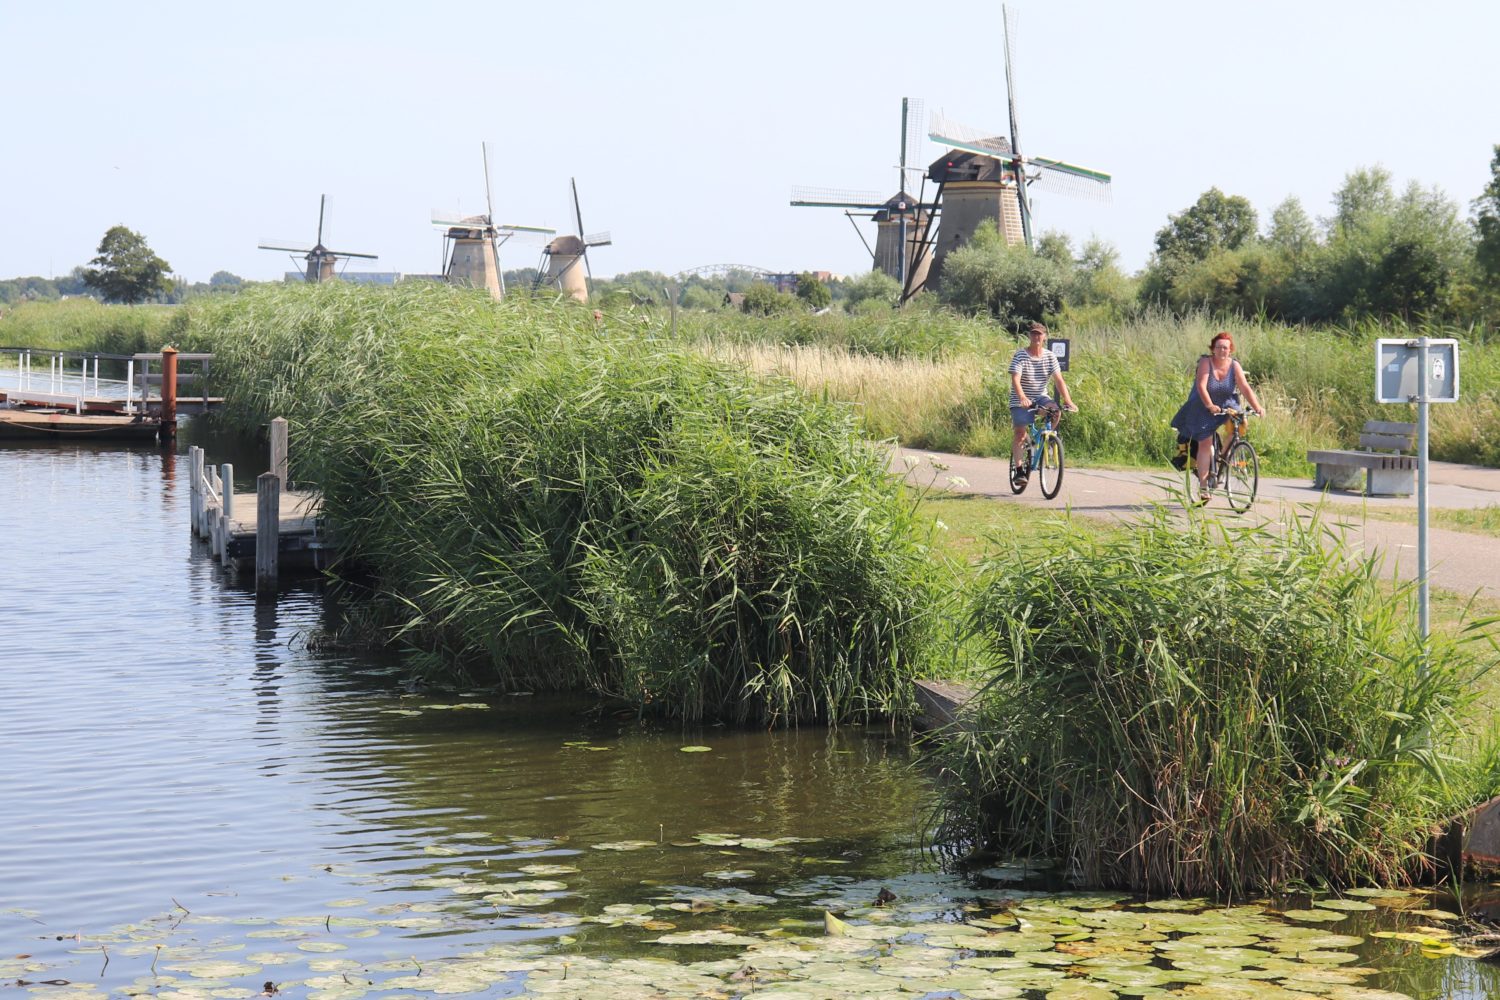 viking river cruises to amsterdam